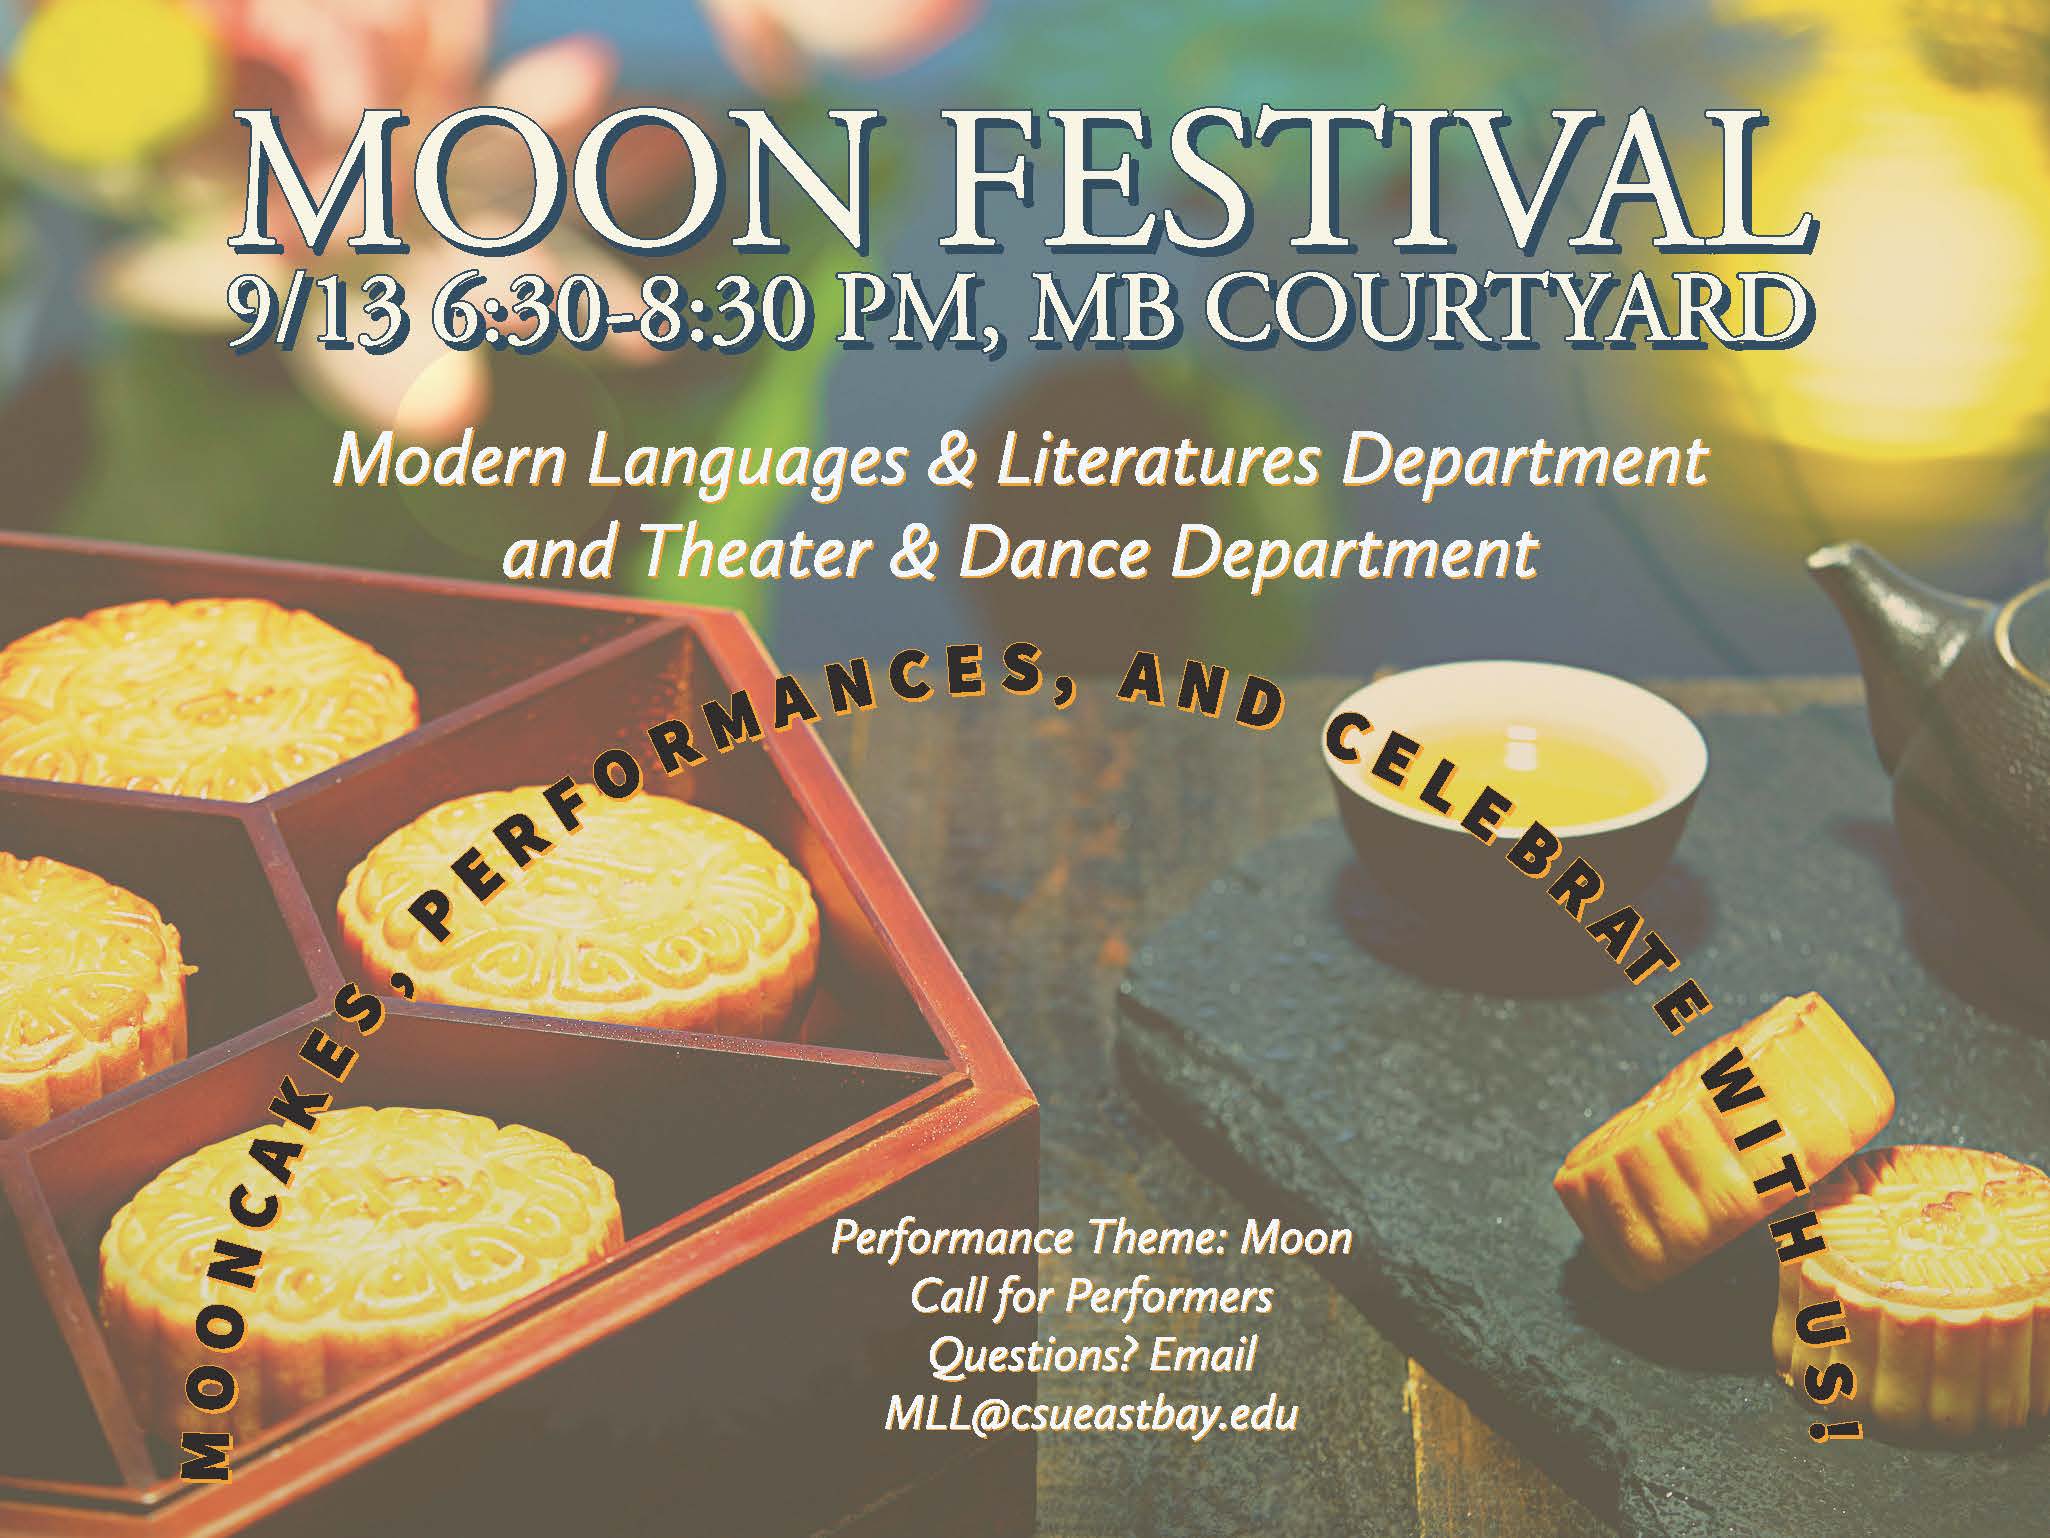 Moon Festival Flyer